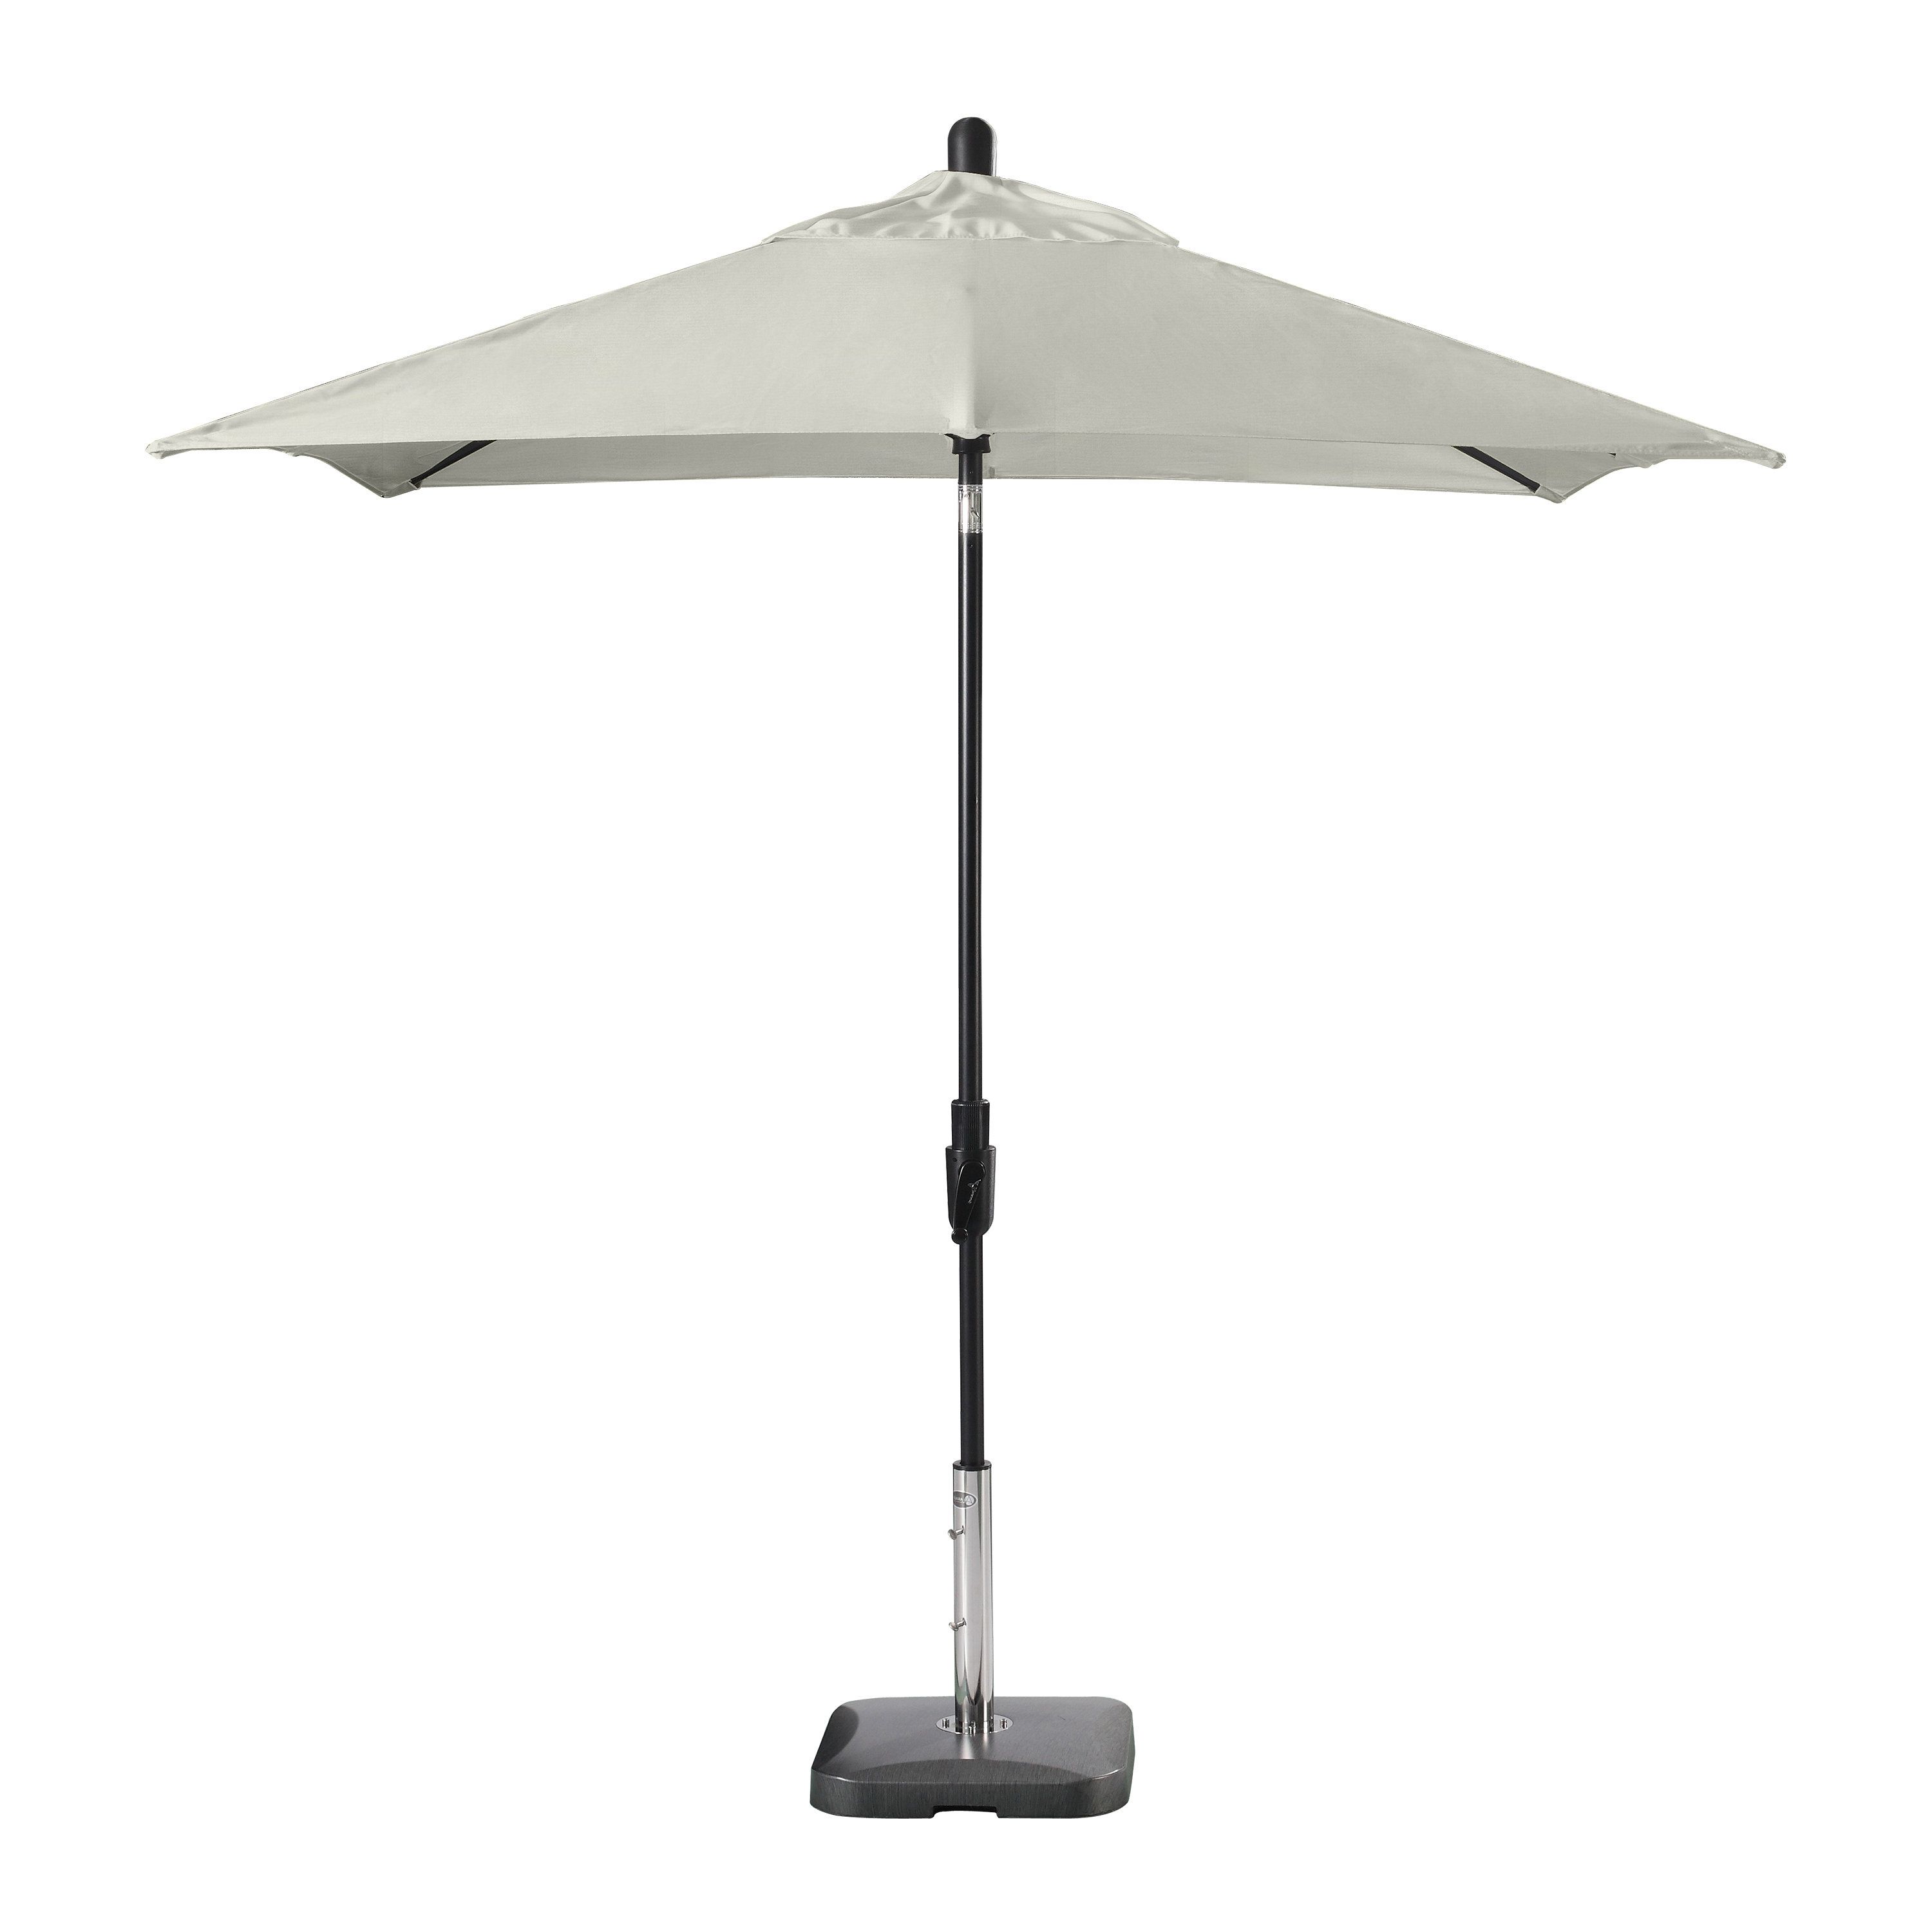 Caravelle Market Sunbrella Umbrellas For Fashionable Wiebe Auto Tilt  (View 4 of 20)